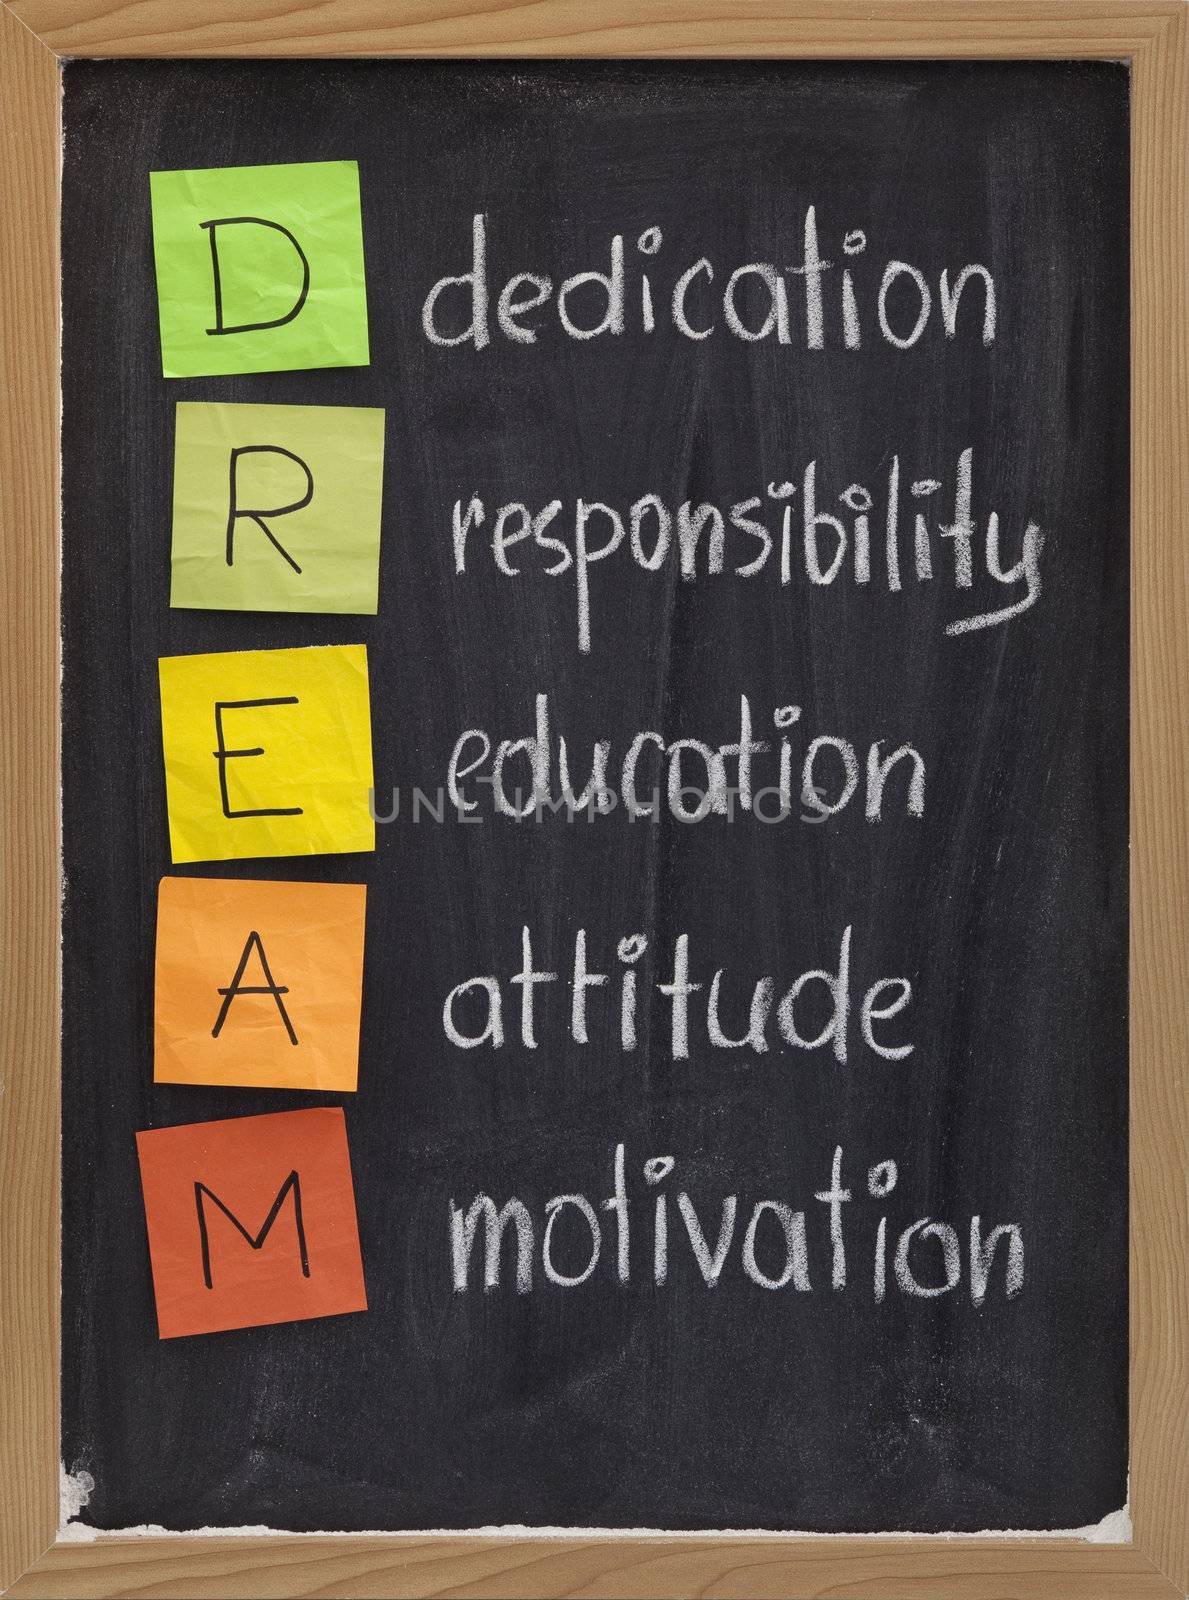 dedication responsibility education attitude motivation by PixelsAway